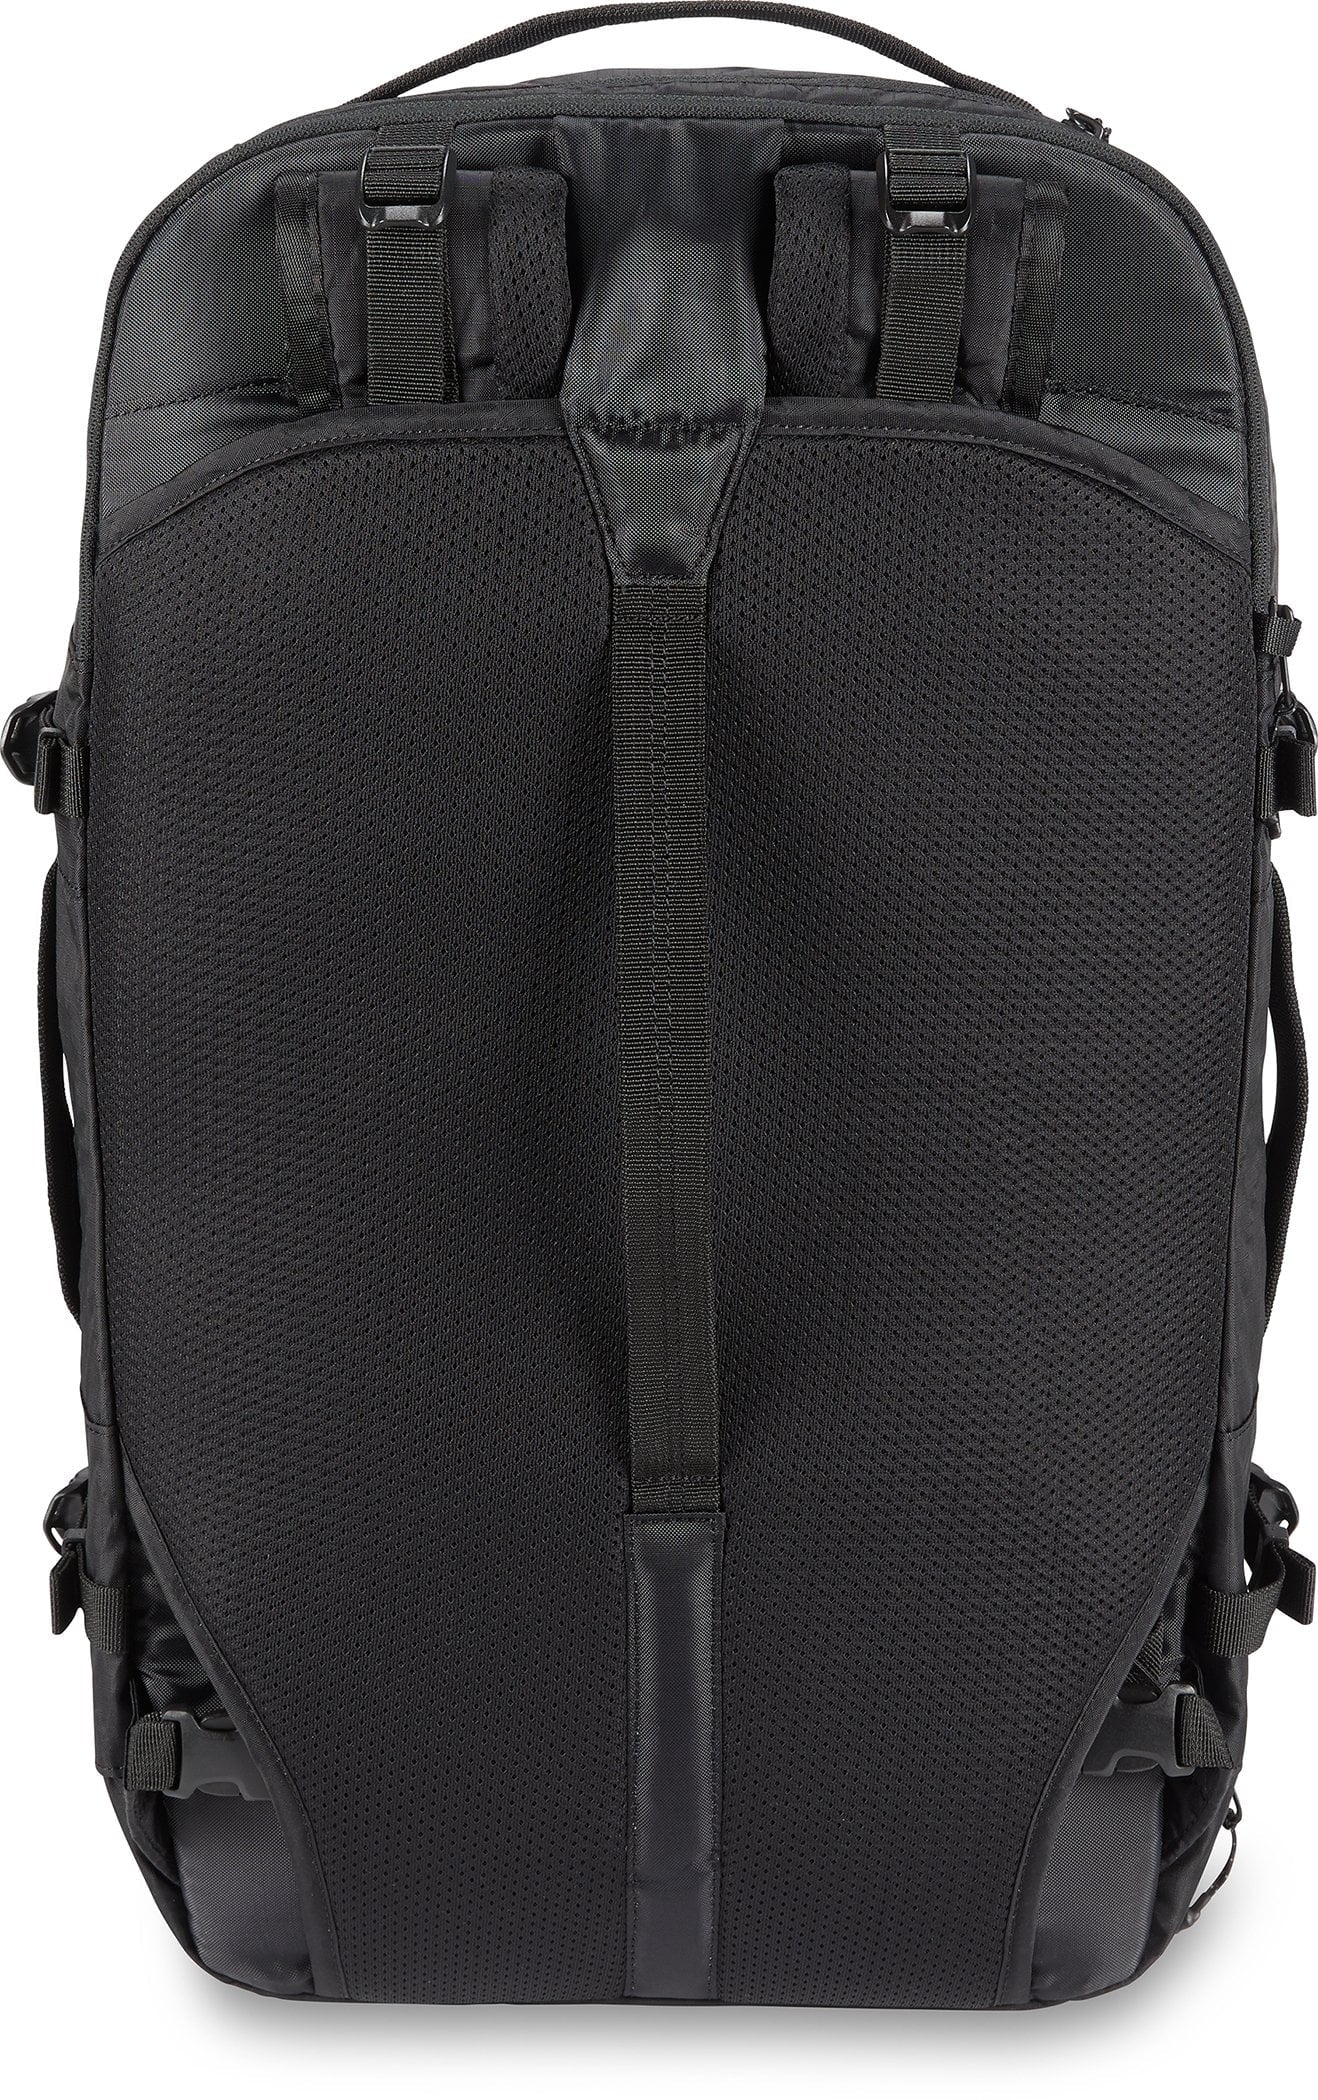 Dakine Split Adventure 38L Travel Backpack - Black Ripstop